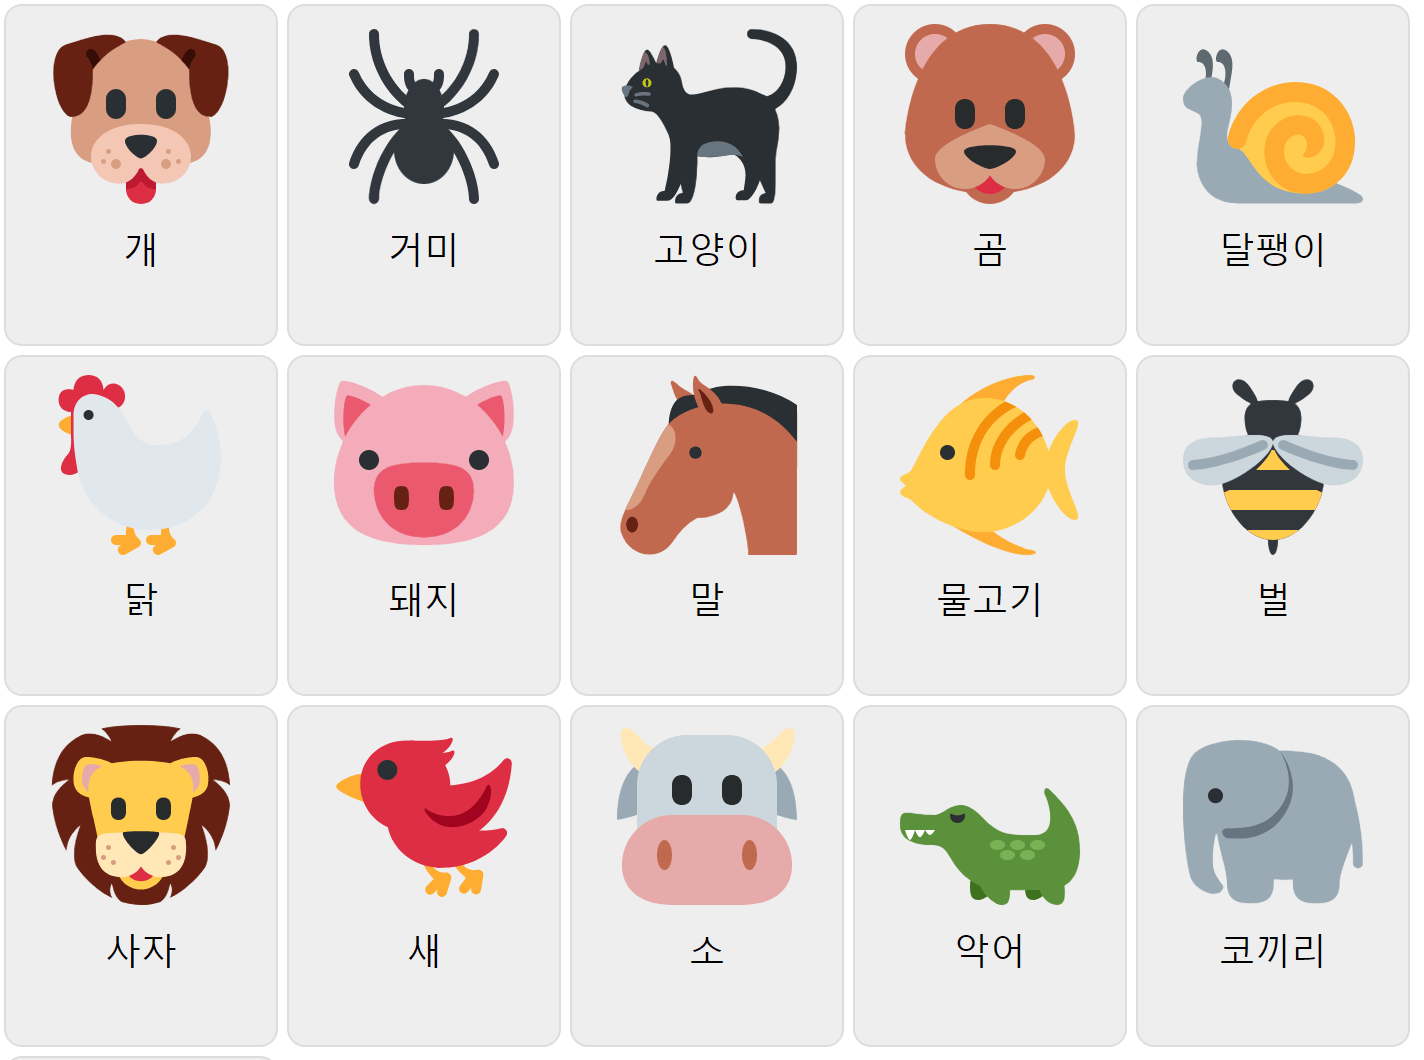 Animals in Korean